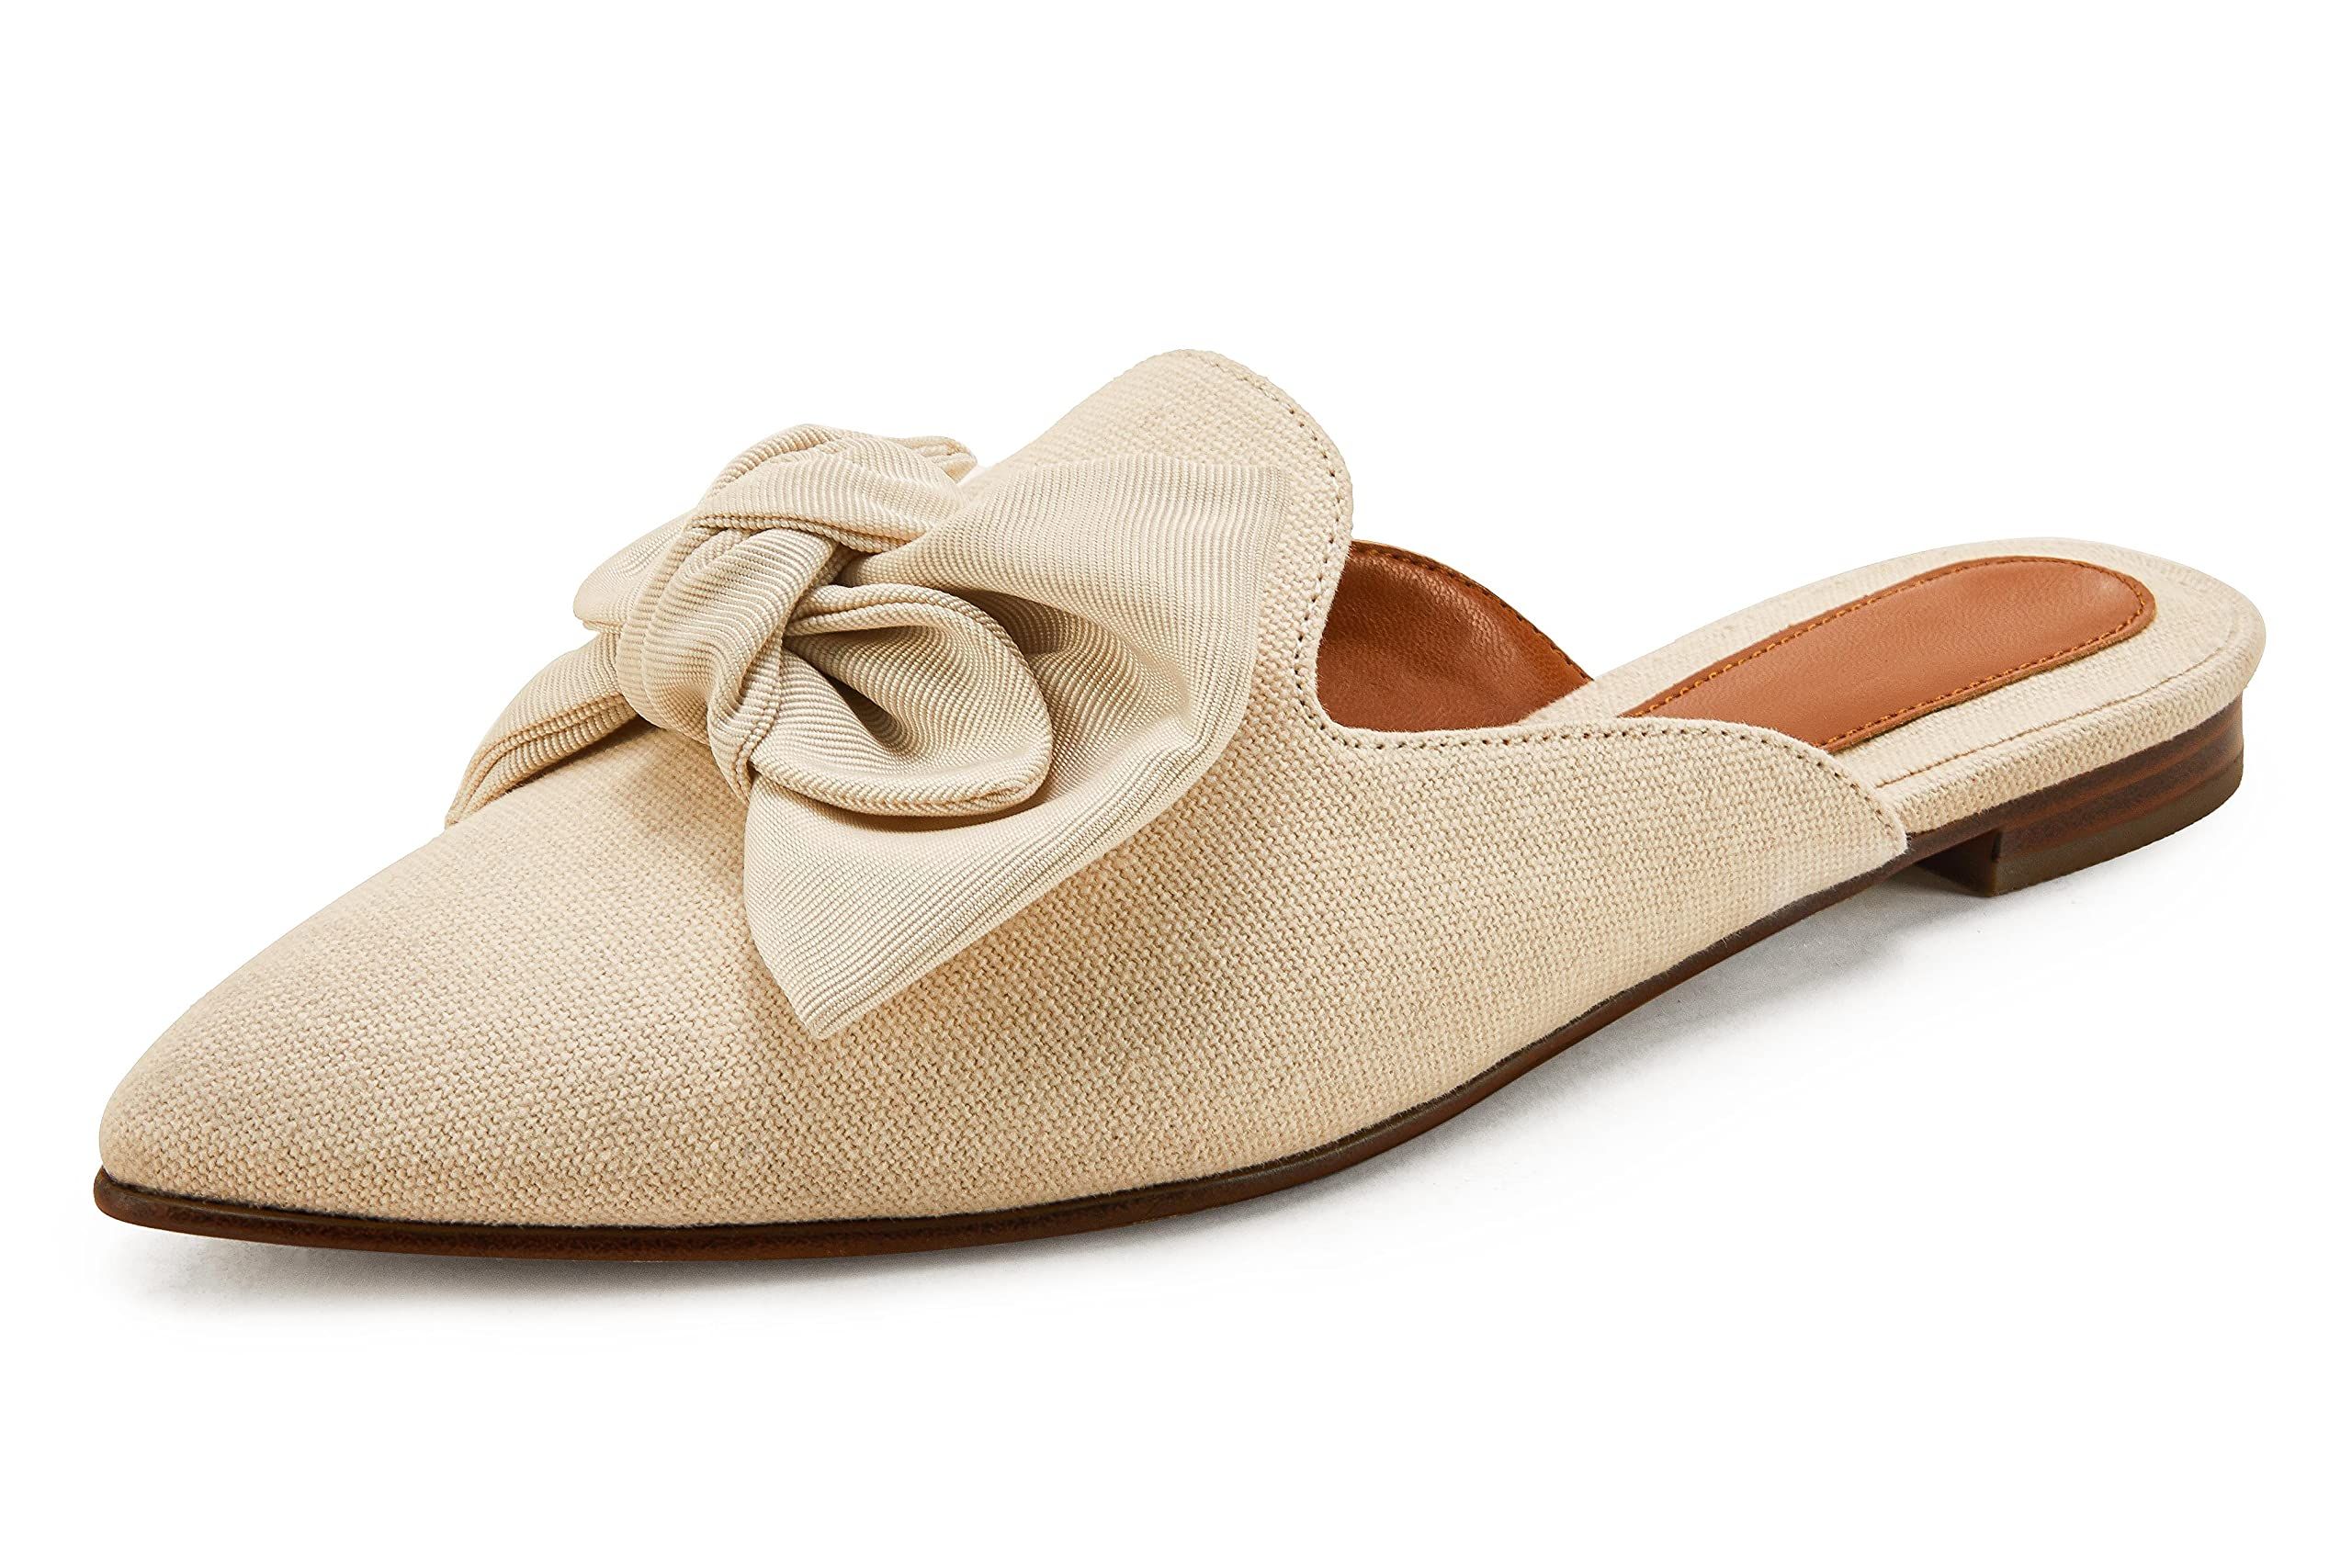 Rilista Pointed Toe Mule Flats Oversized Bows Easy Slip-On Backless Shoes for Women | Amazon (US)